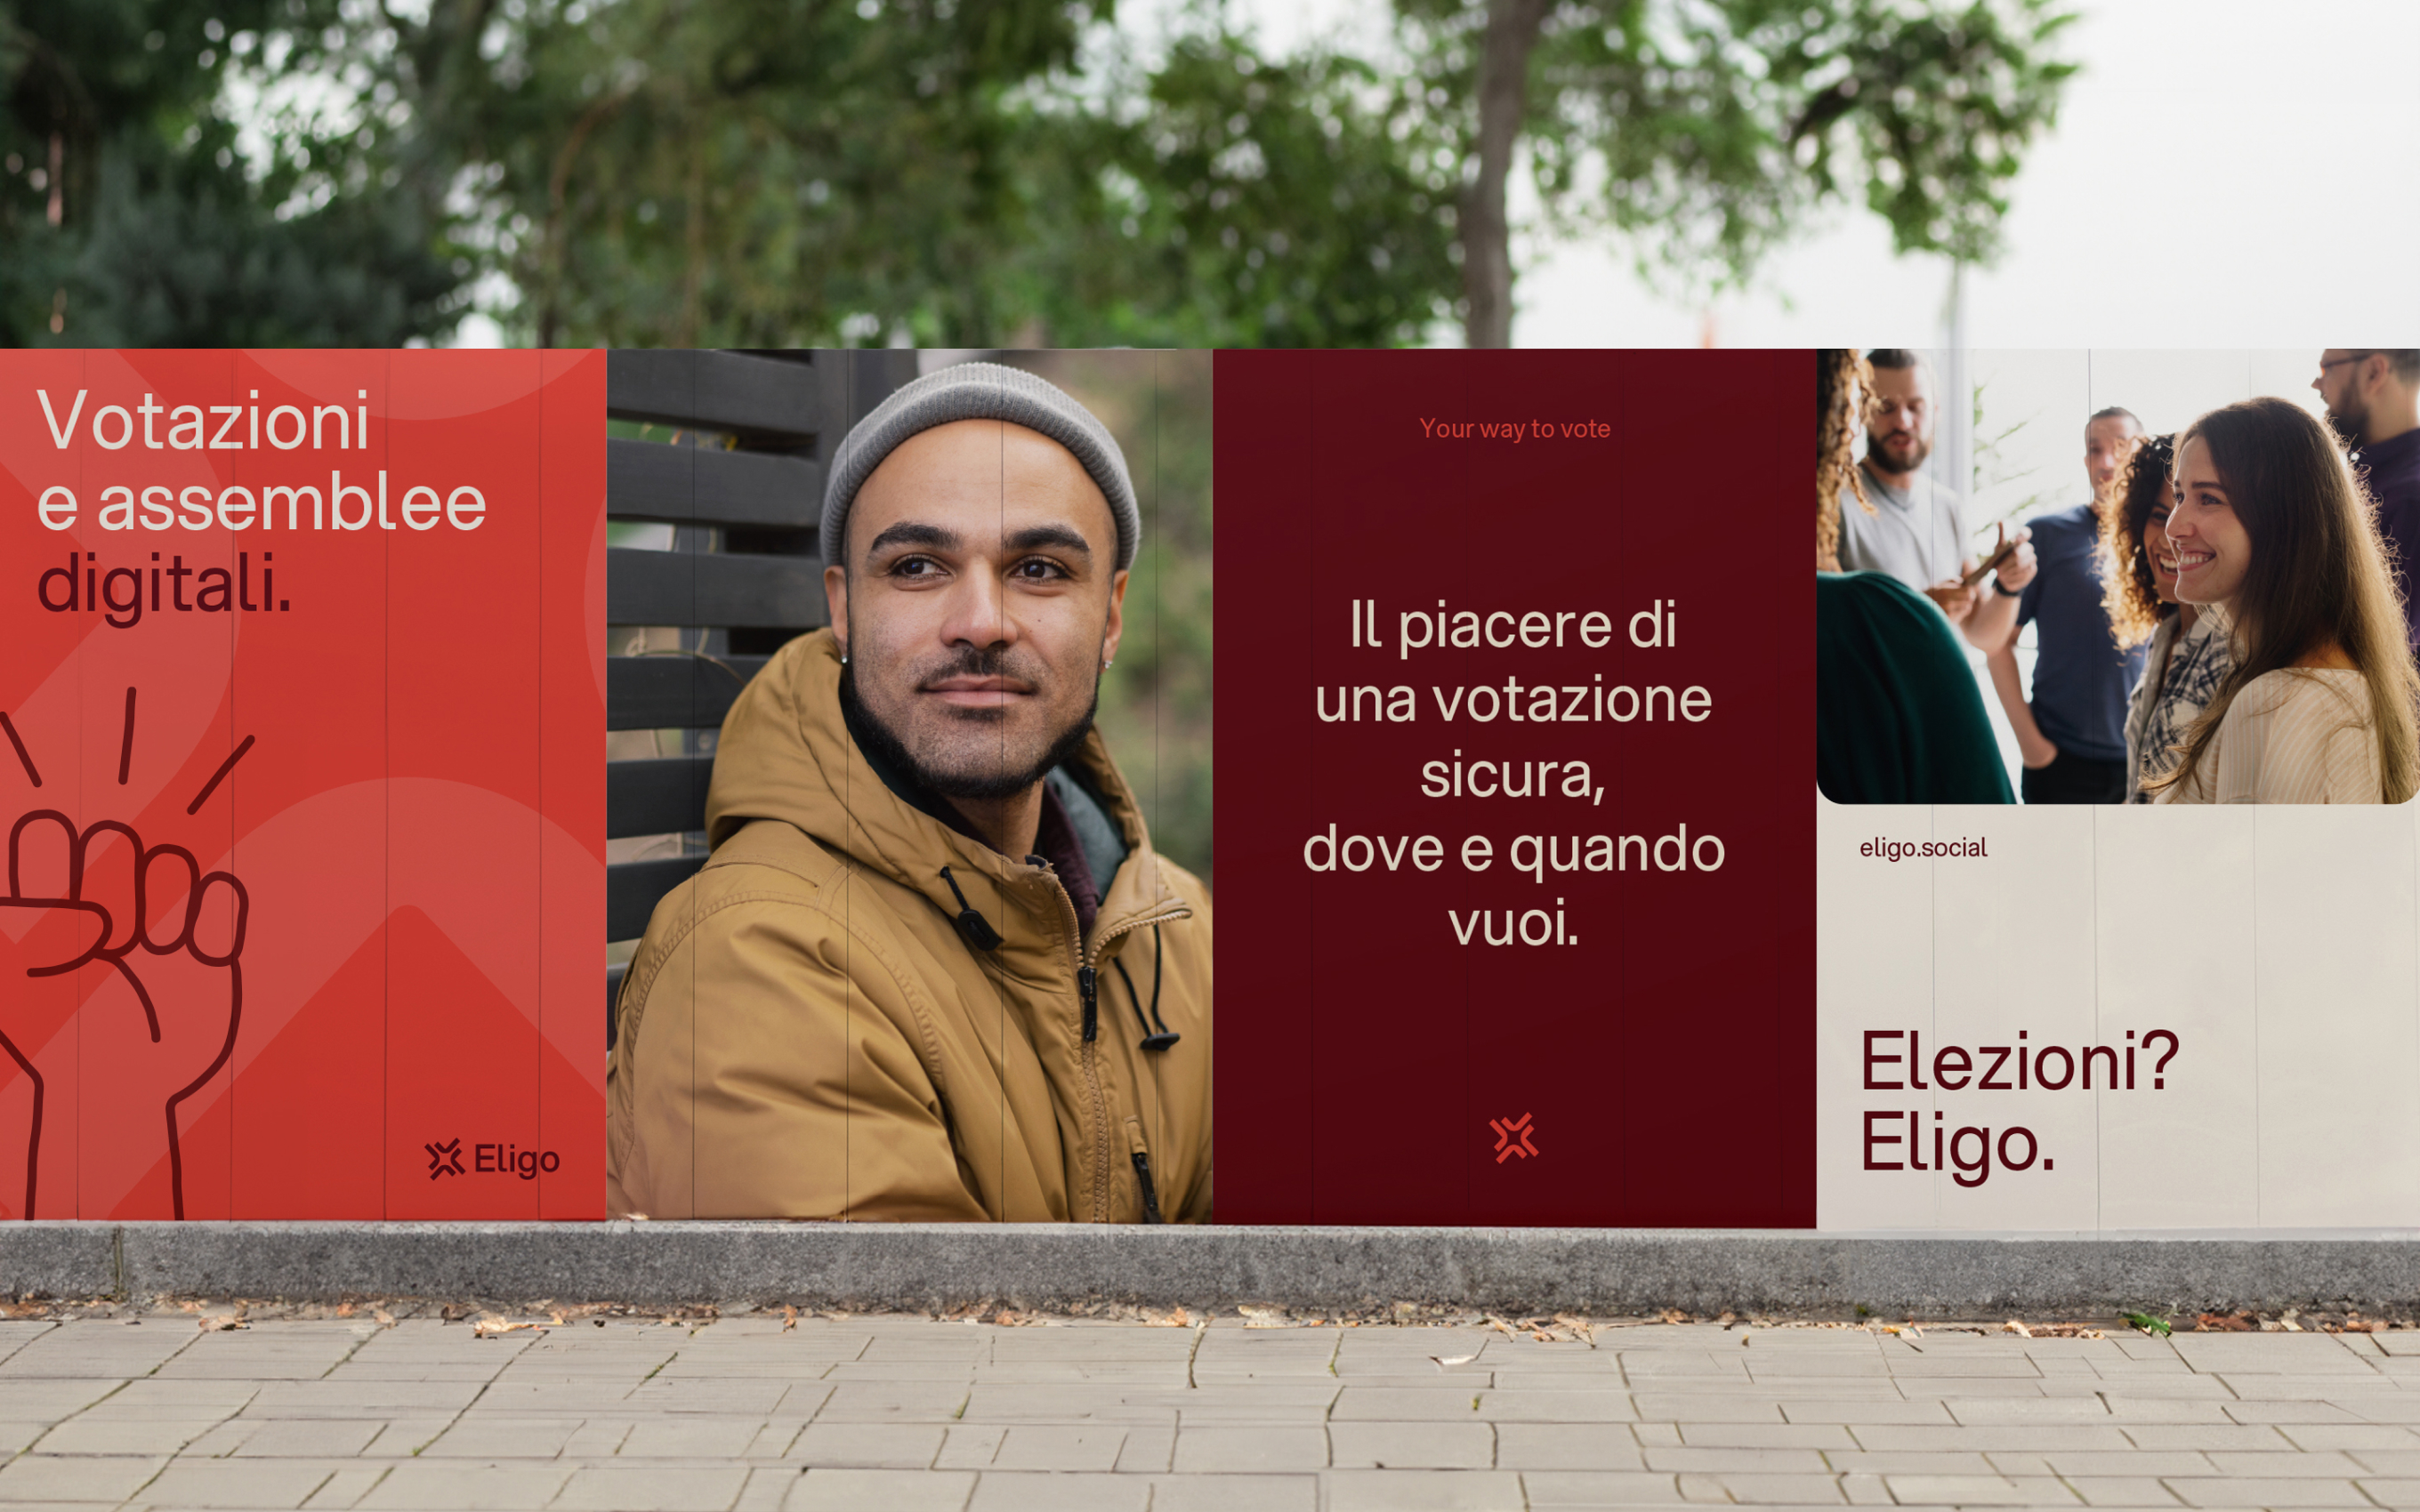 Eligo billboard